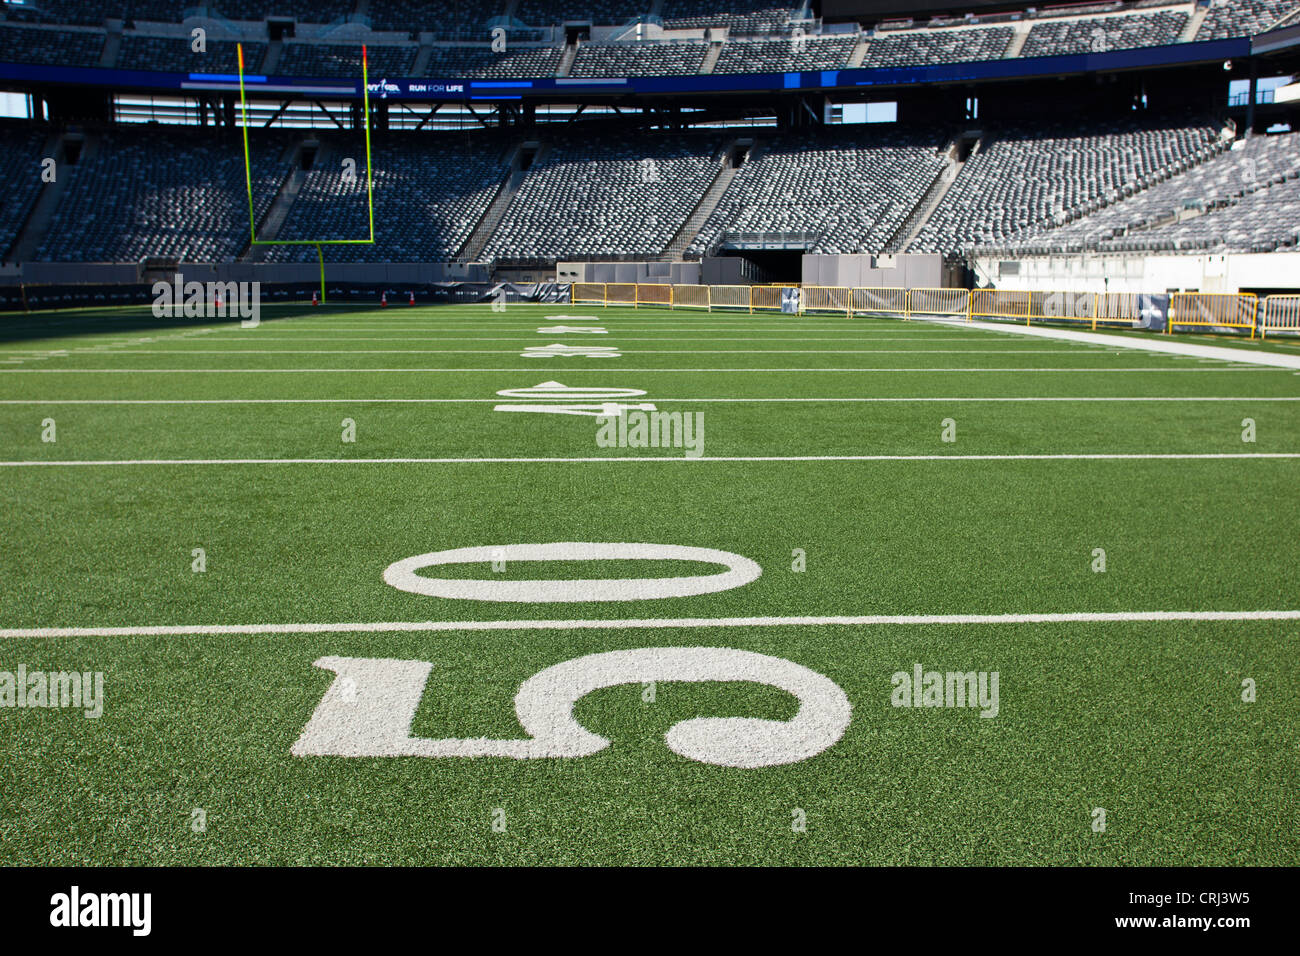 50 yard line marker in American Football stadium. Stock Photo